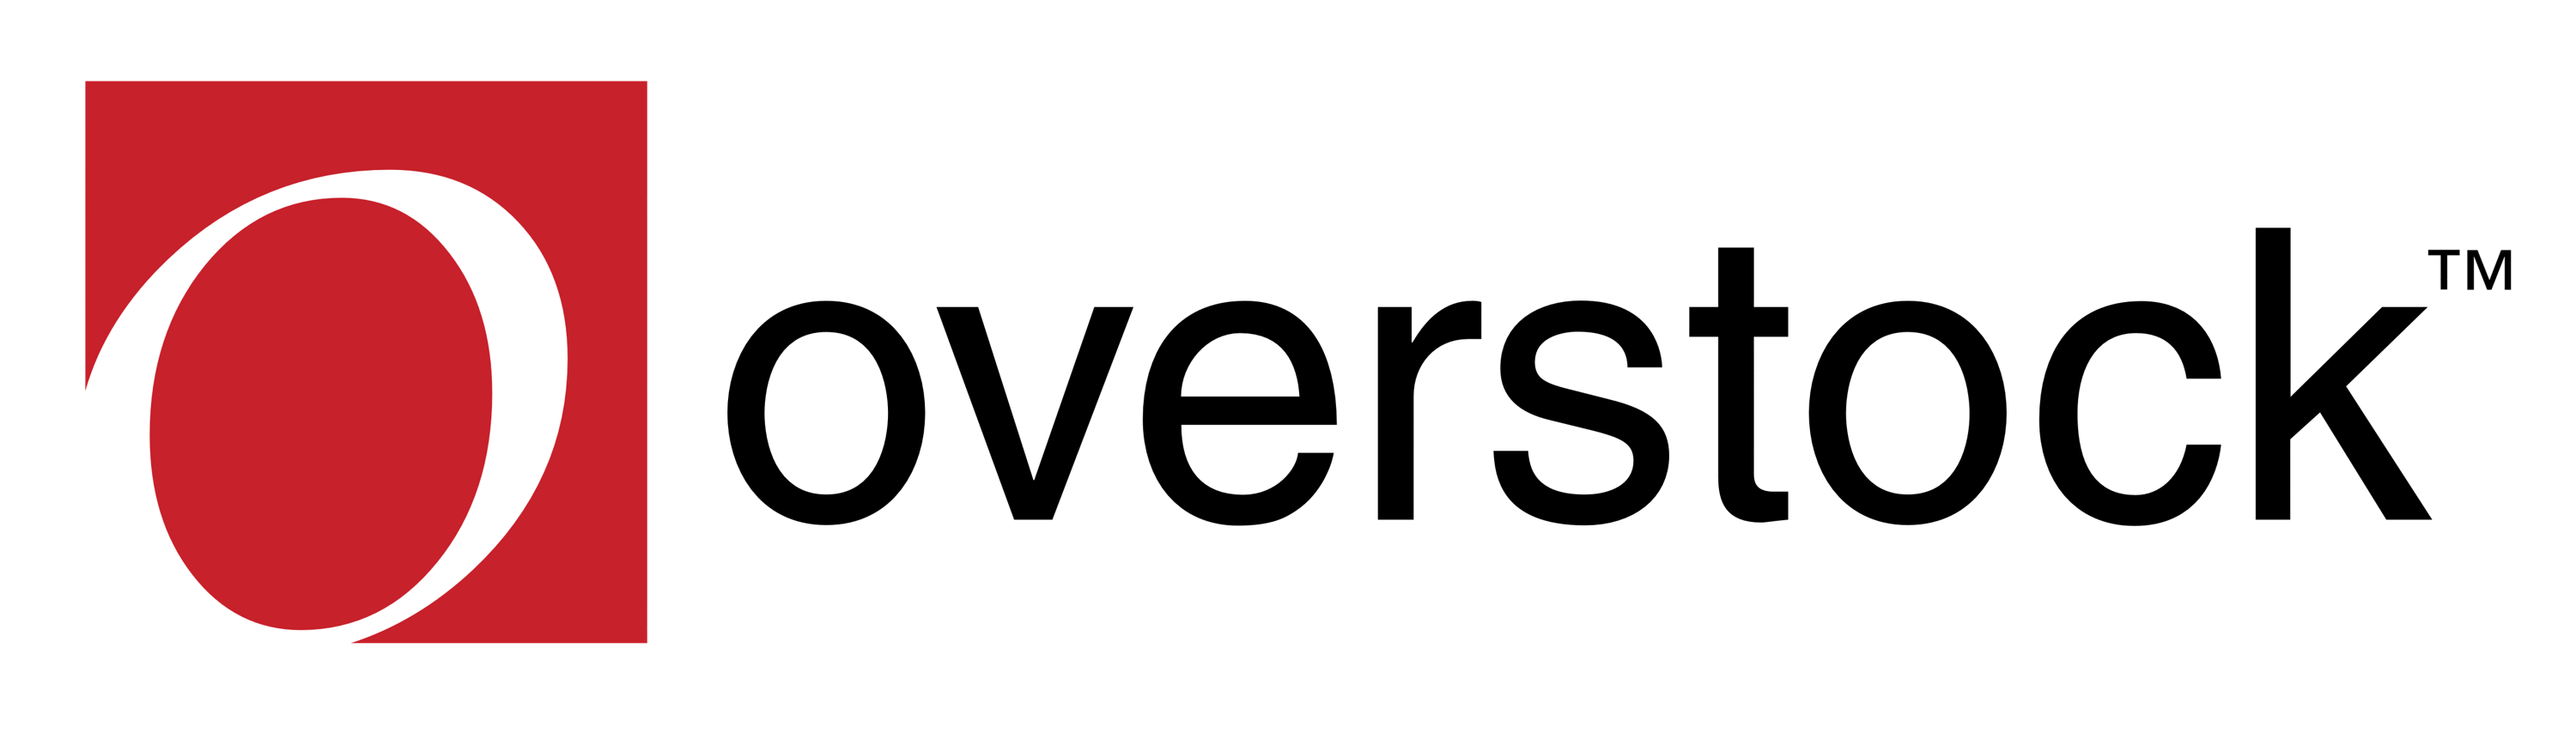 Overstock Logo